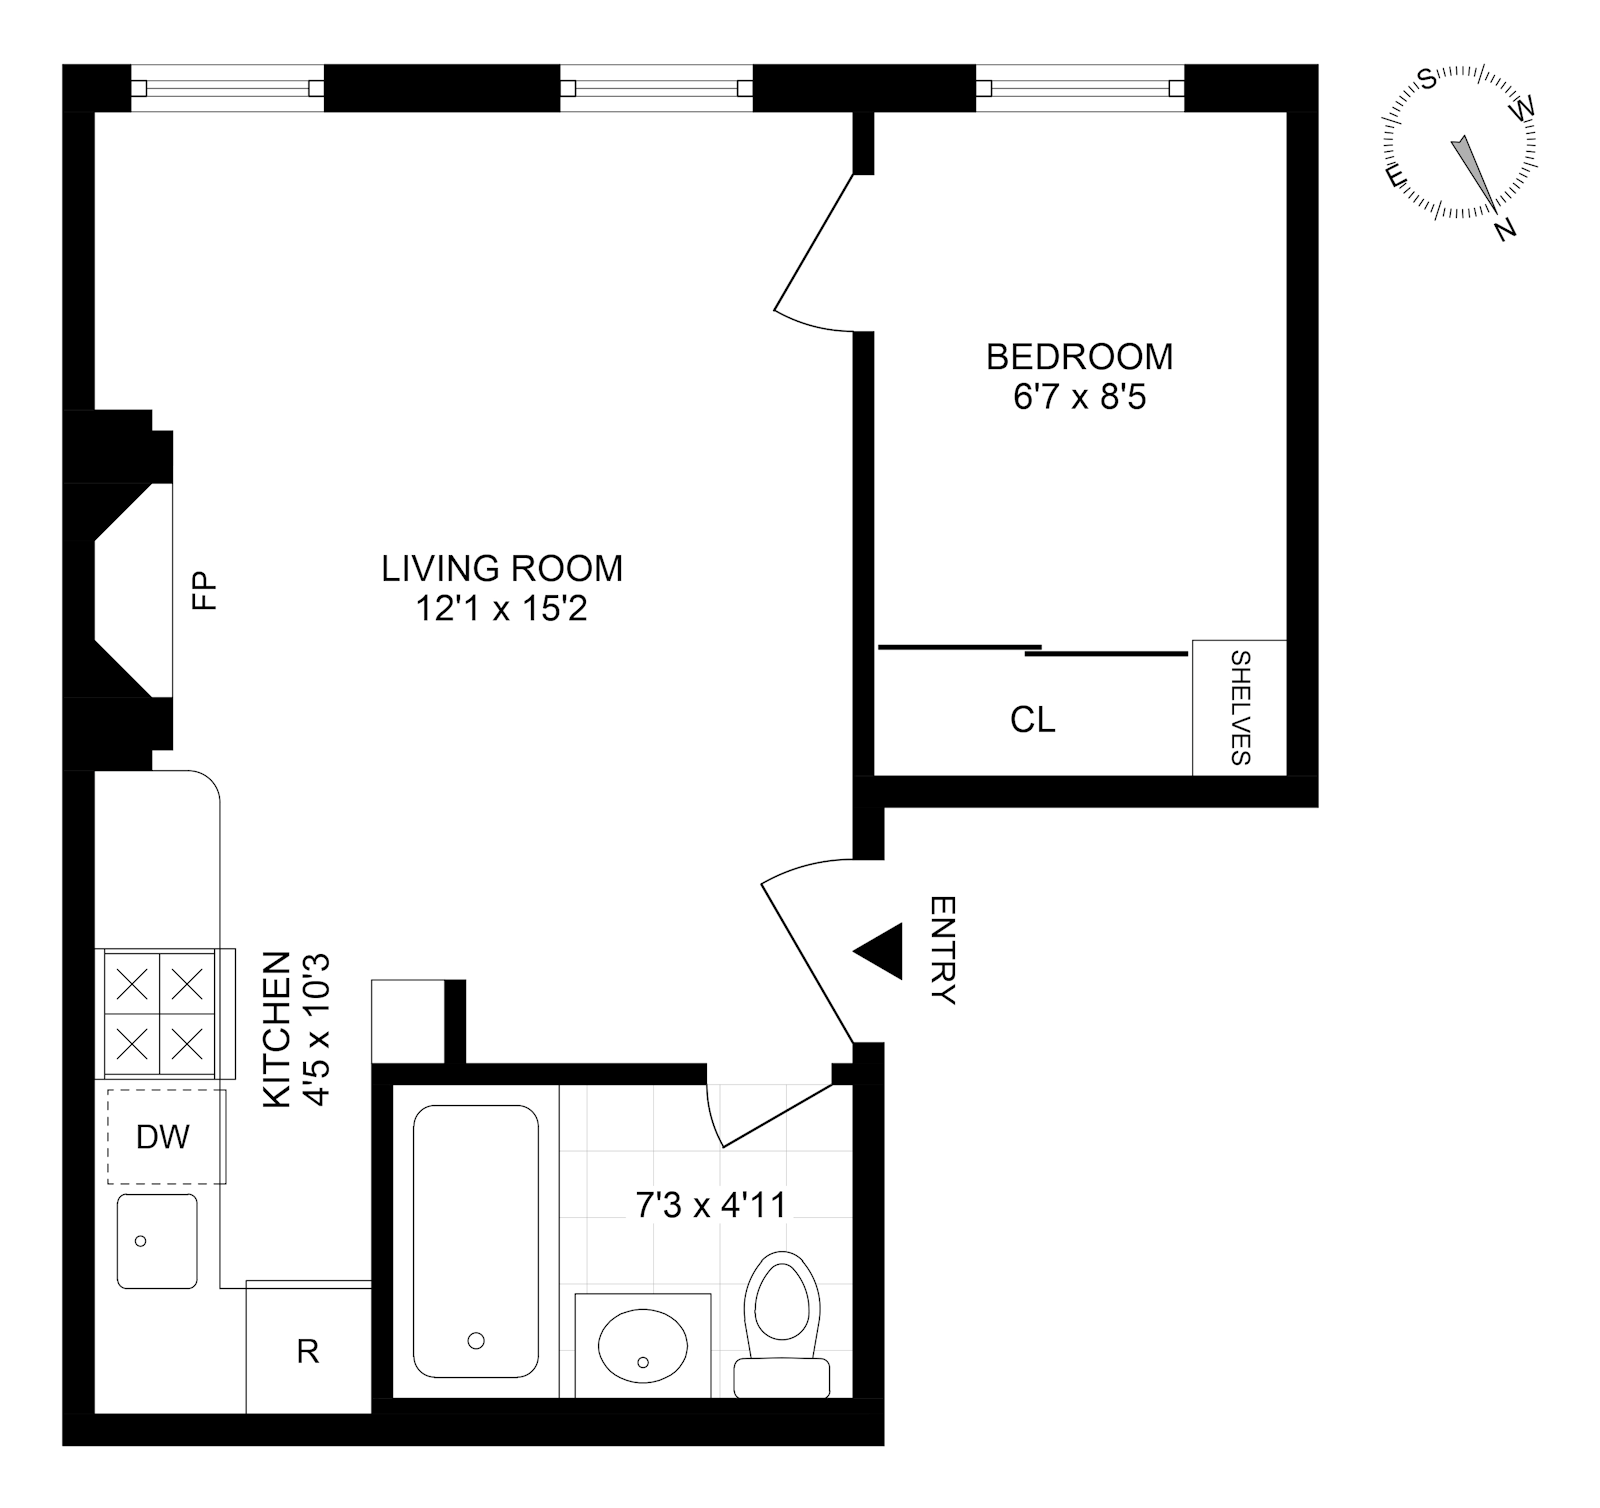 Floorplan for 239 West 13th Street, 2F